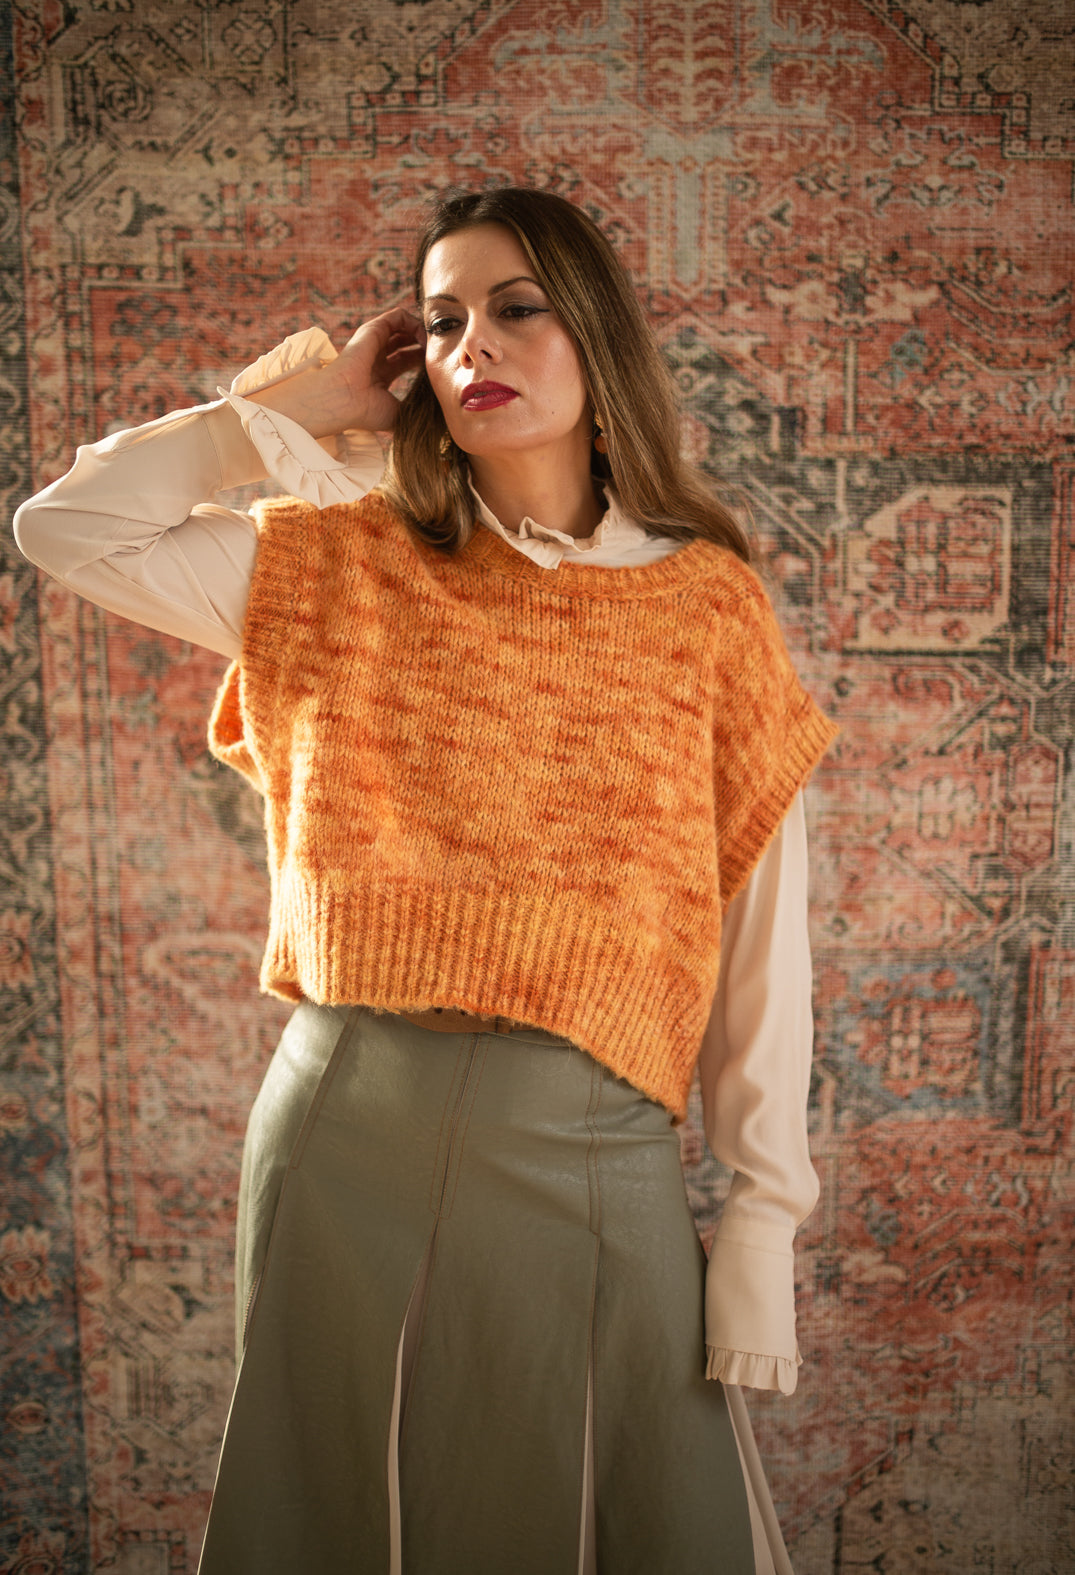 lady wearing an orange knitted vest